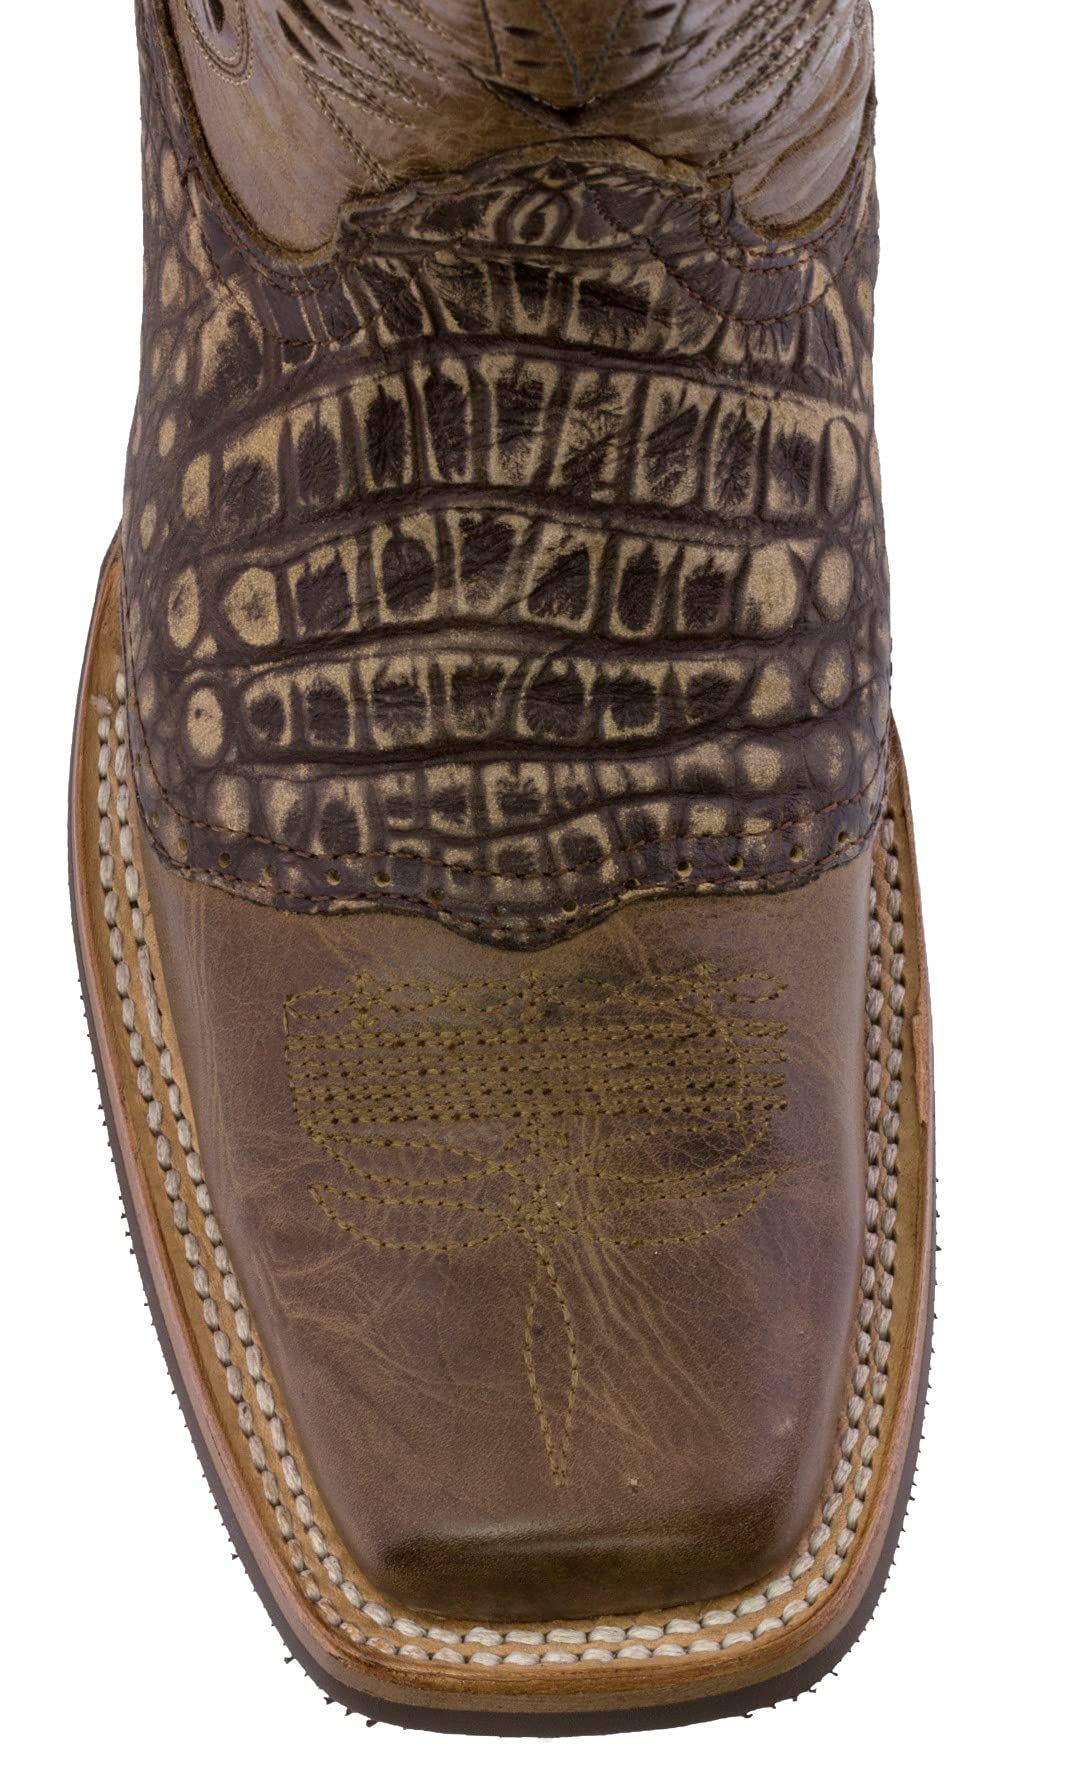 Texas Legacy Mens Sand Western Leather Cowboy Boots Crocodile Print Square Toe